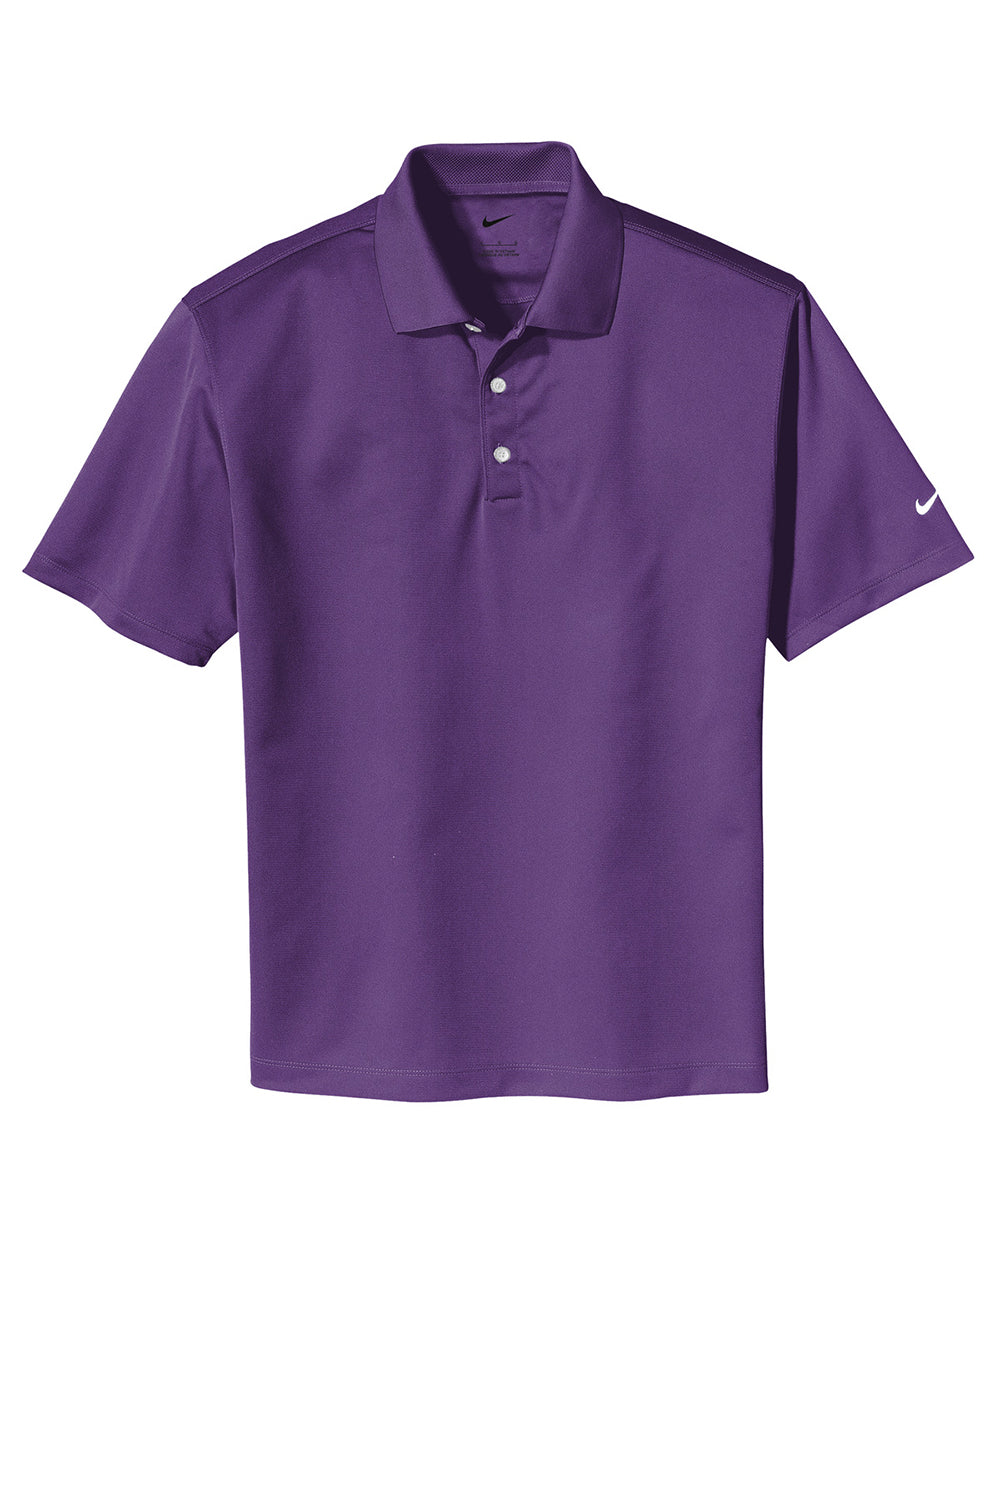 Nike 203690 Mens Tech Basic Dri-Fit Moisture Wicking Short Sleeve Polo Shirt Varsity Purple Flat Front